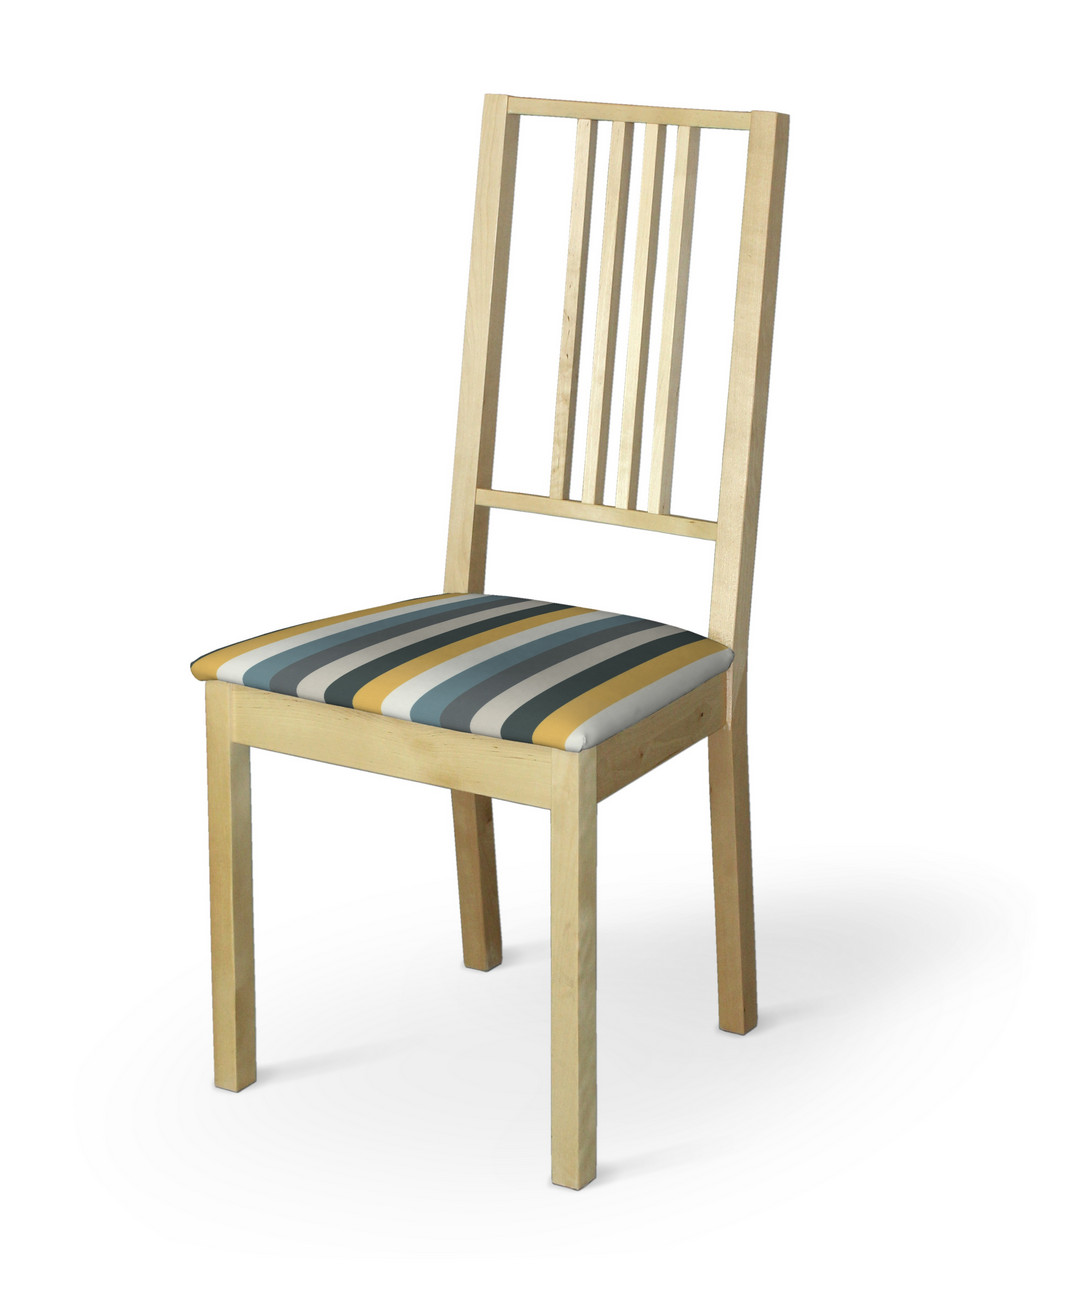 Dekoria Potah na sedák židle Börje, pruhy modrá šedá žlůutá, potah sedák židle Börje, Vintage 70's, 143-59